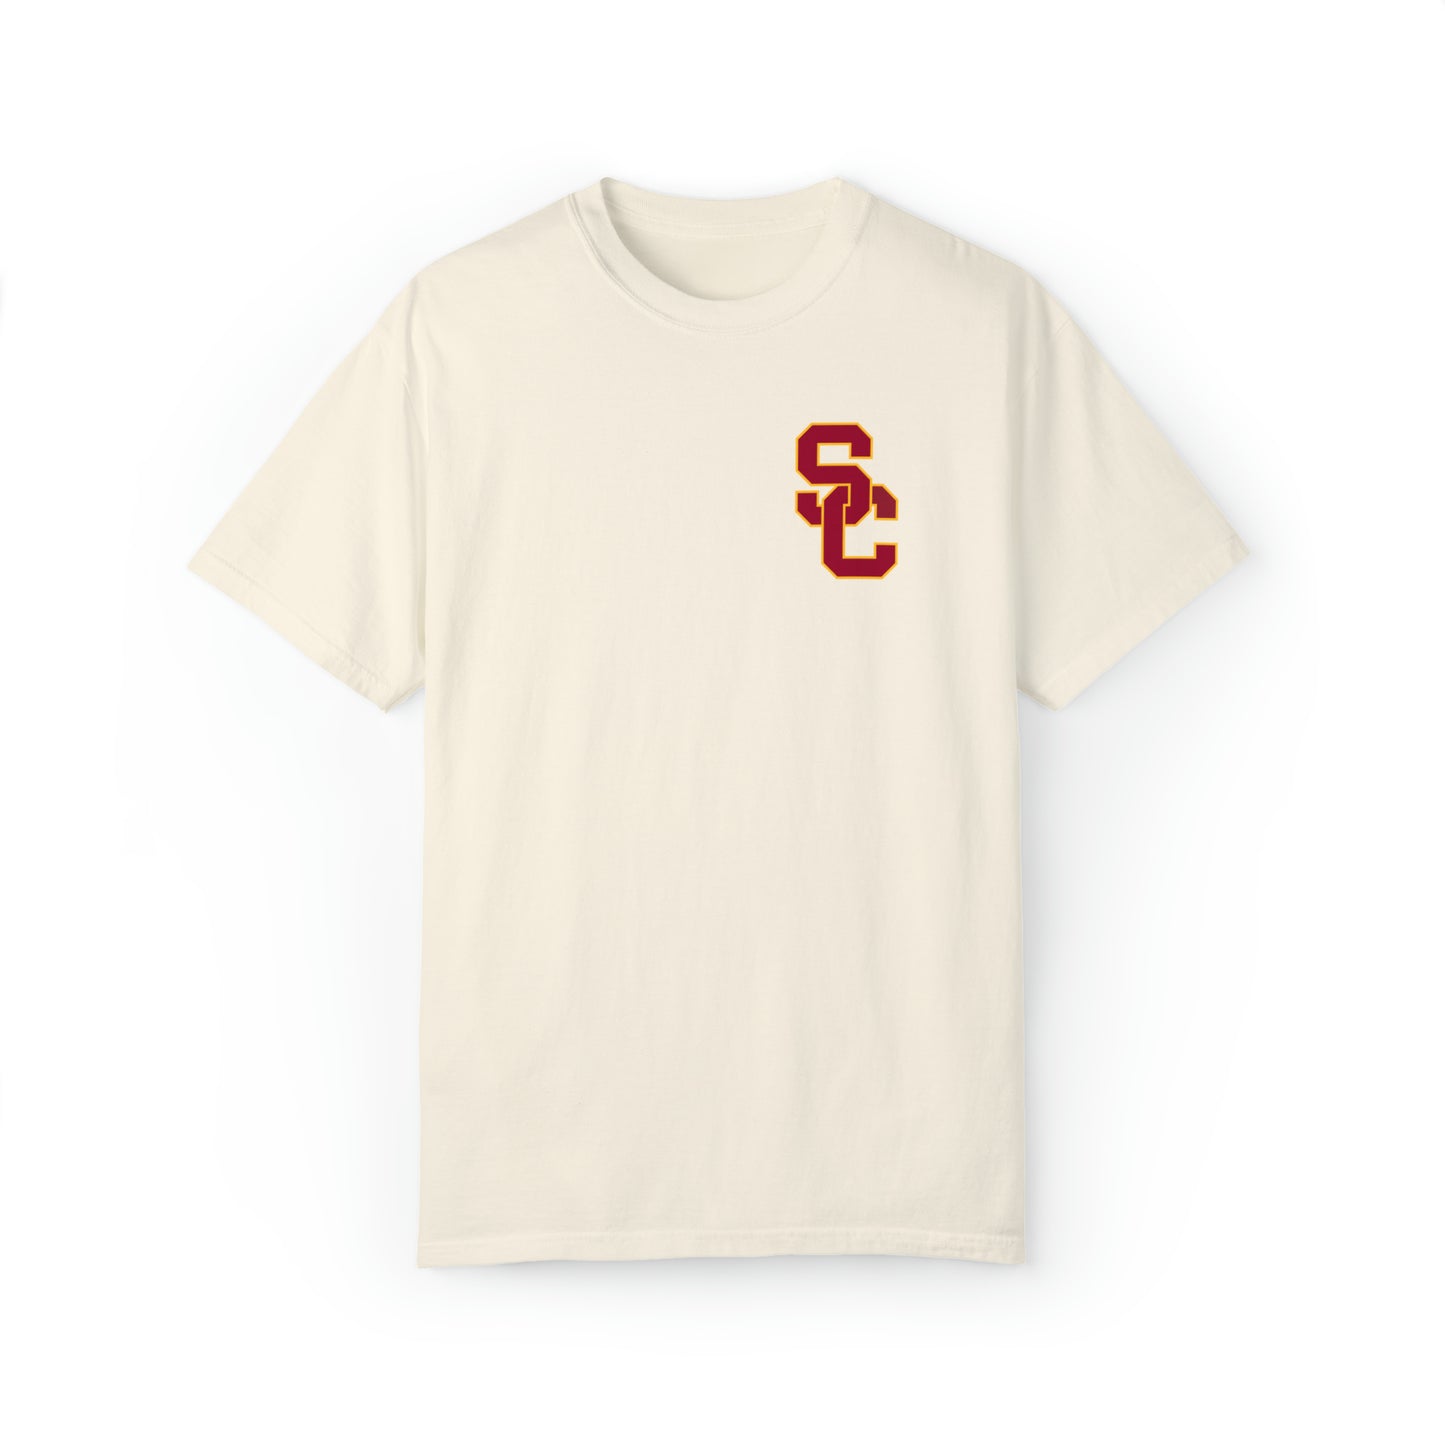 USC Trojans Game Day shirt